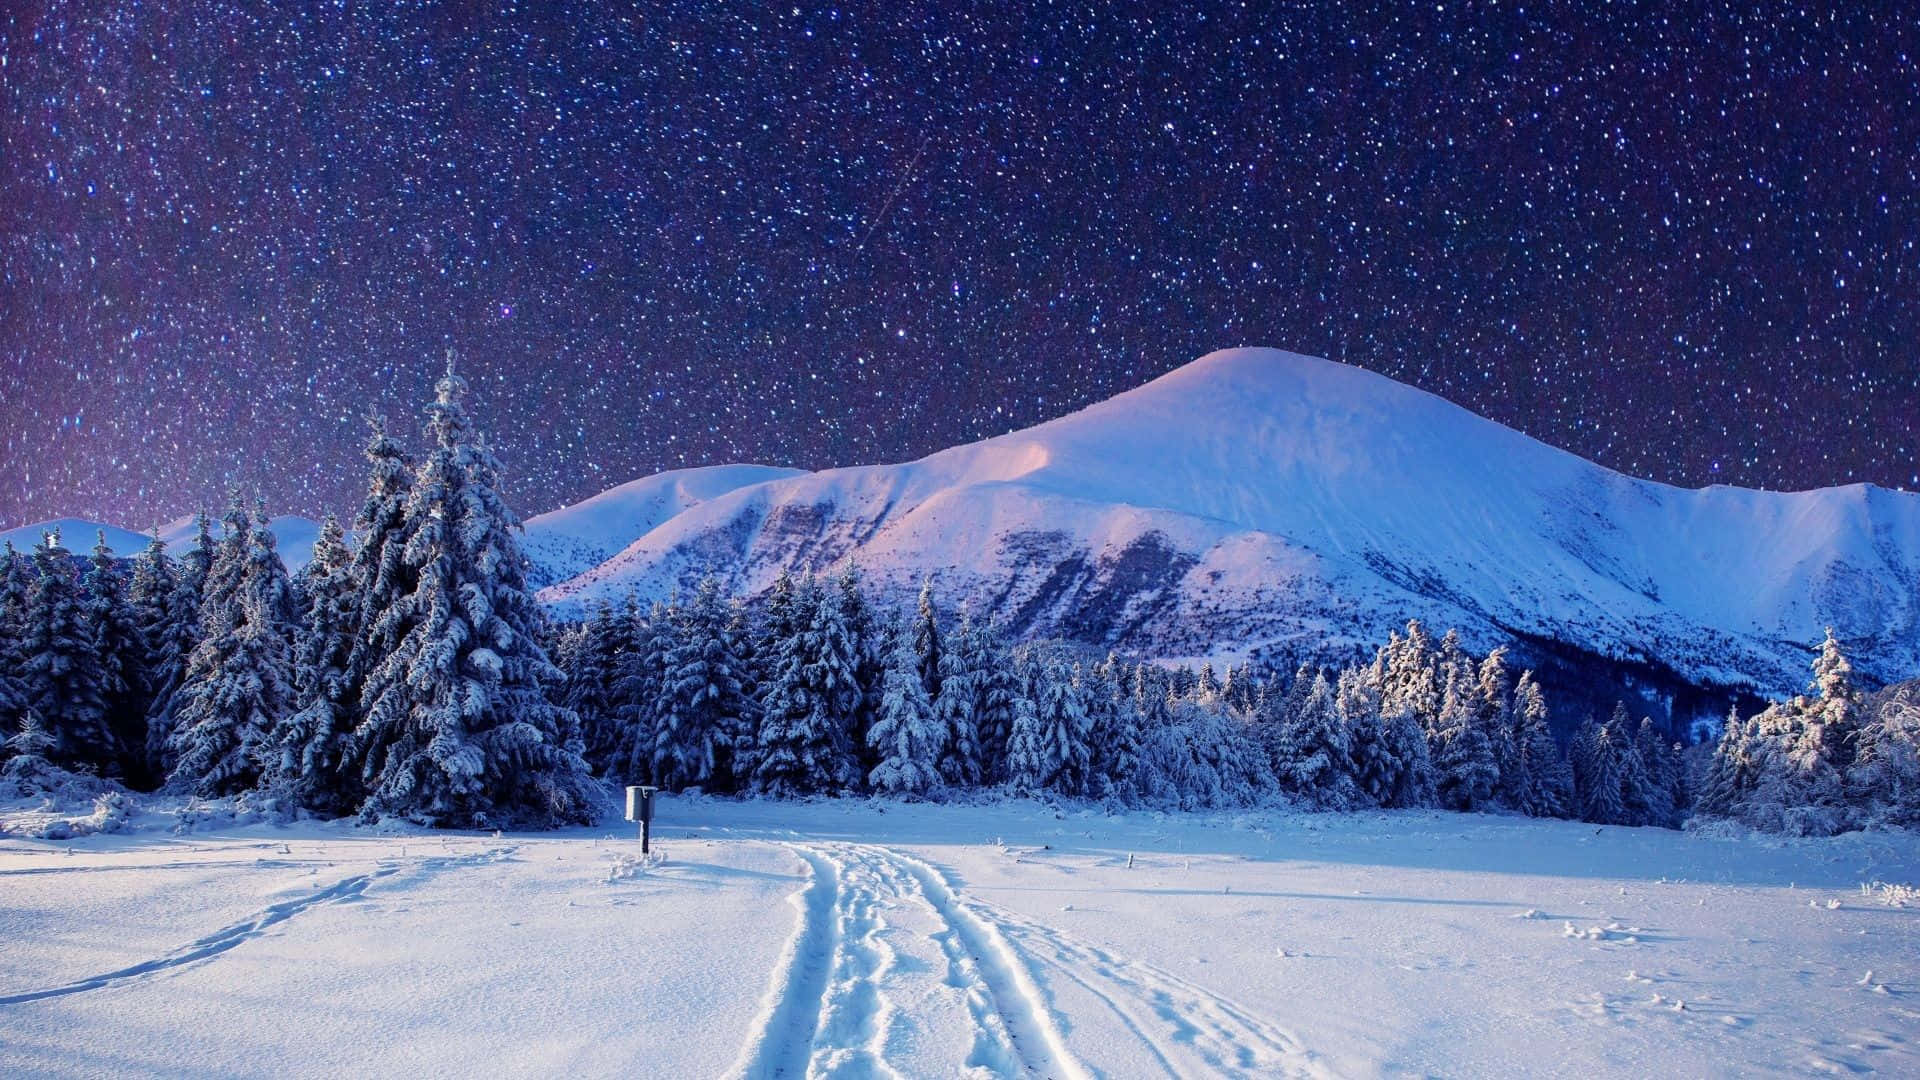 Snowy Landscape in Serene Winter Wonderland Wallpaper